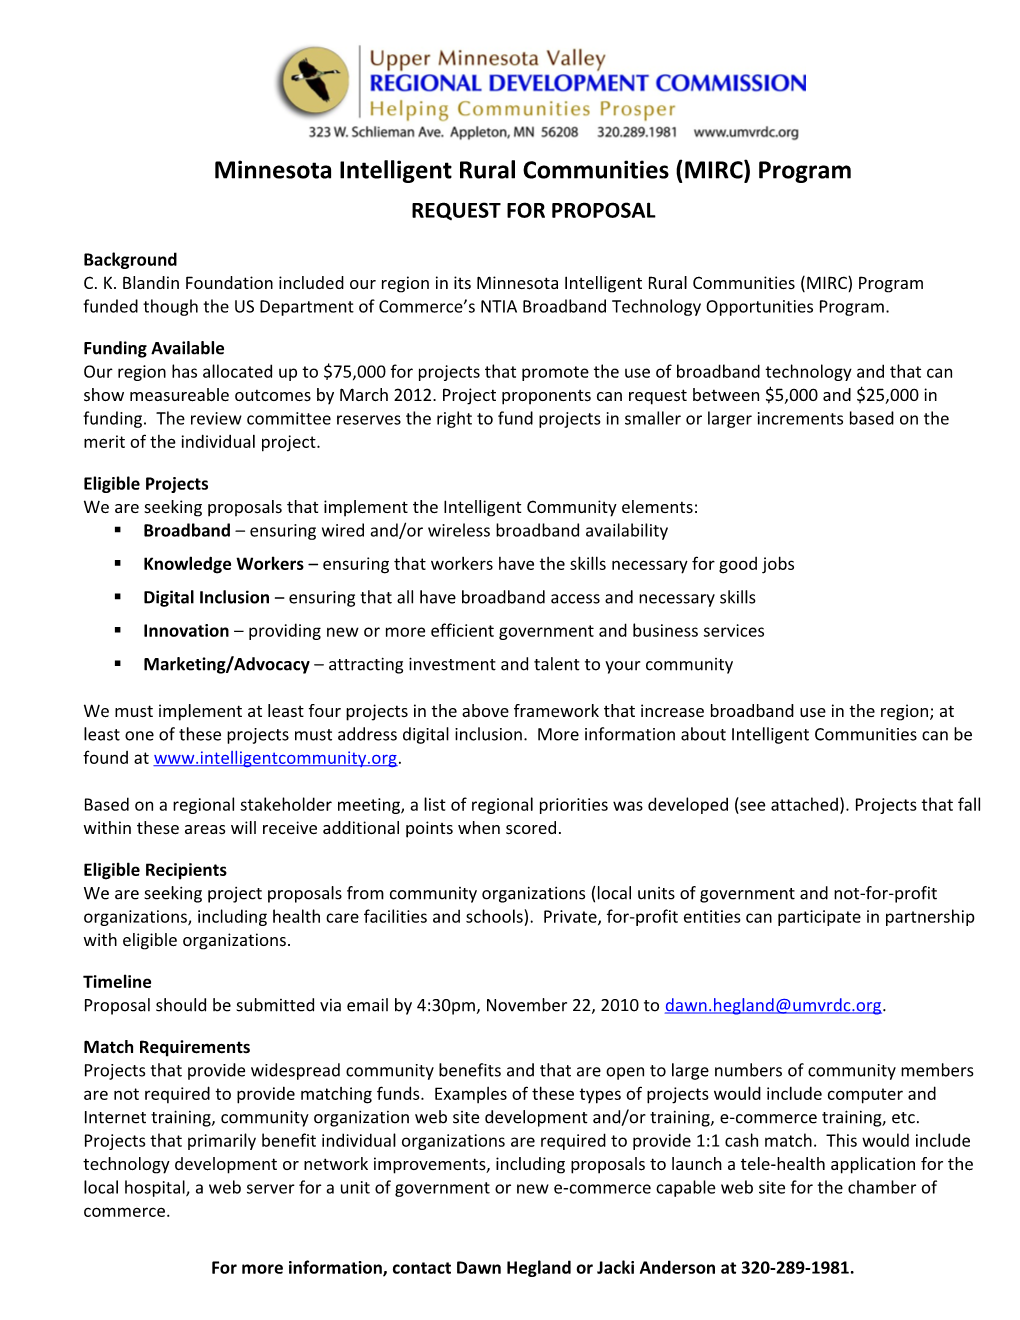 Minnesota Intelligent Communities Program